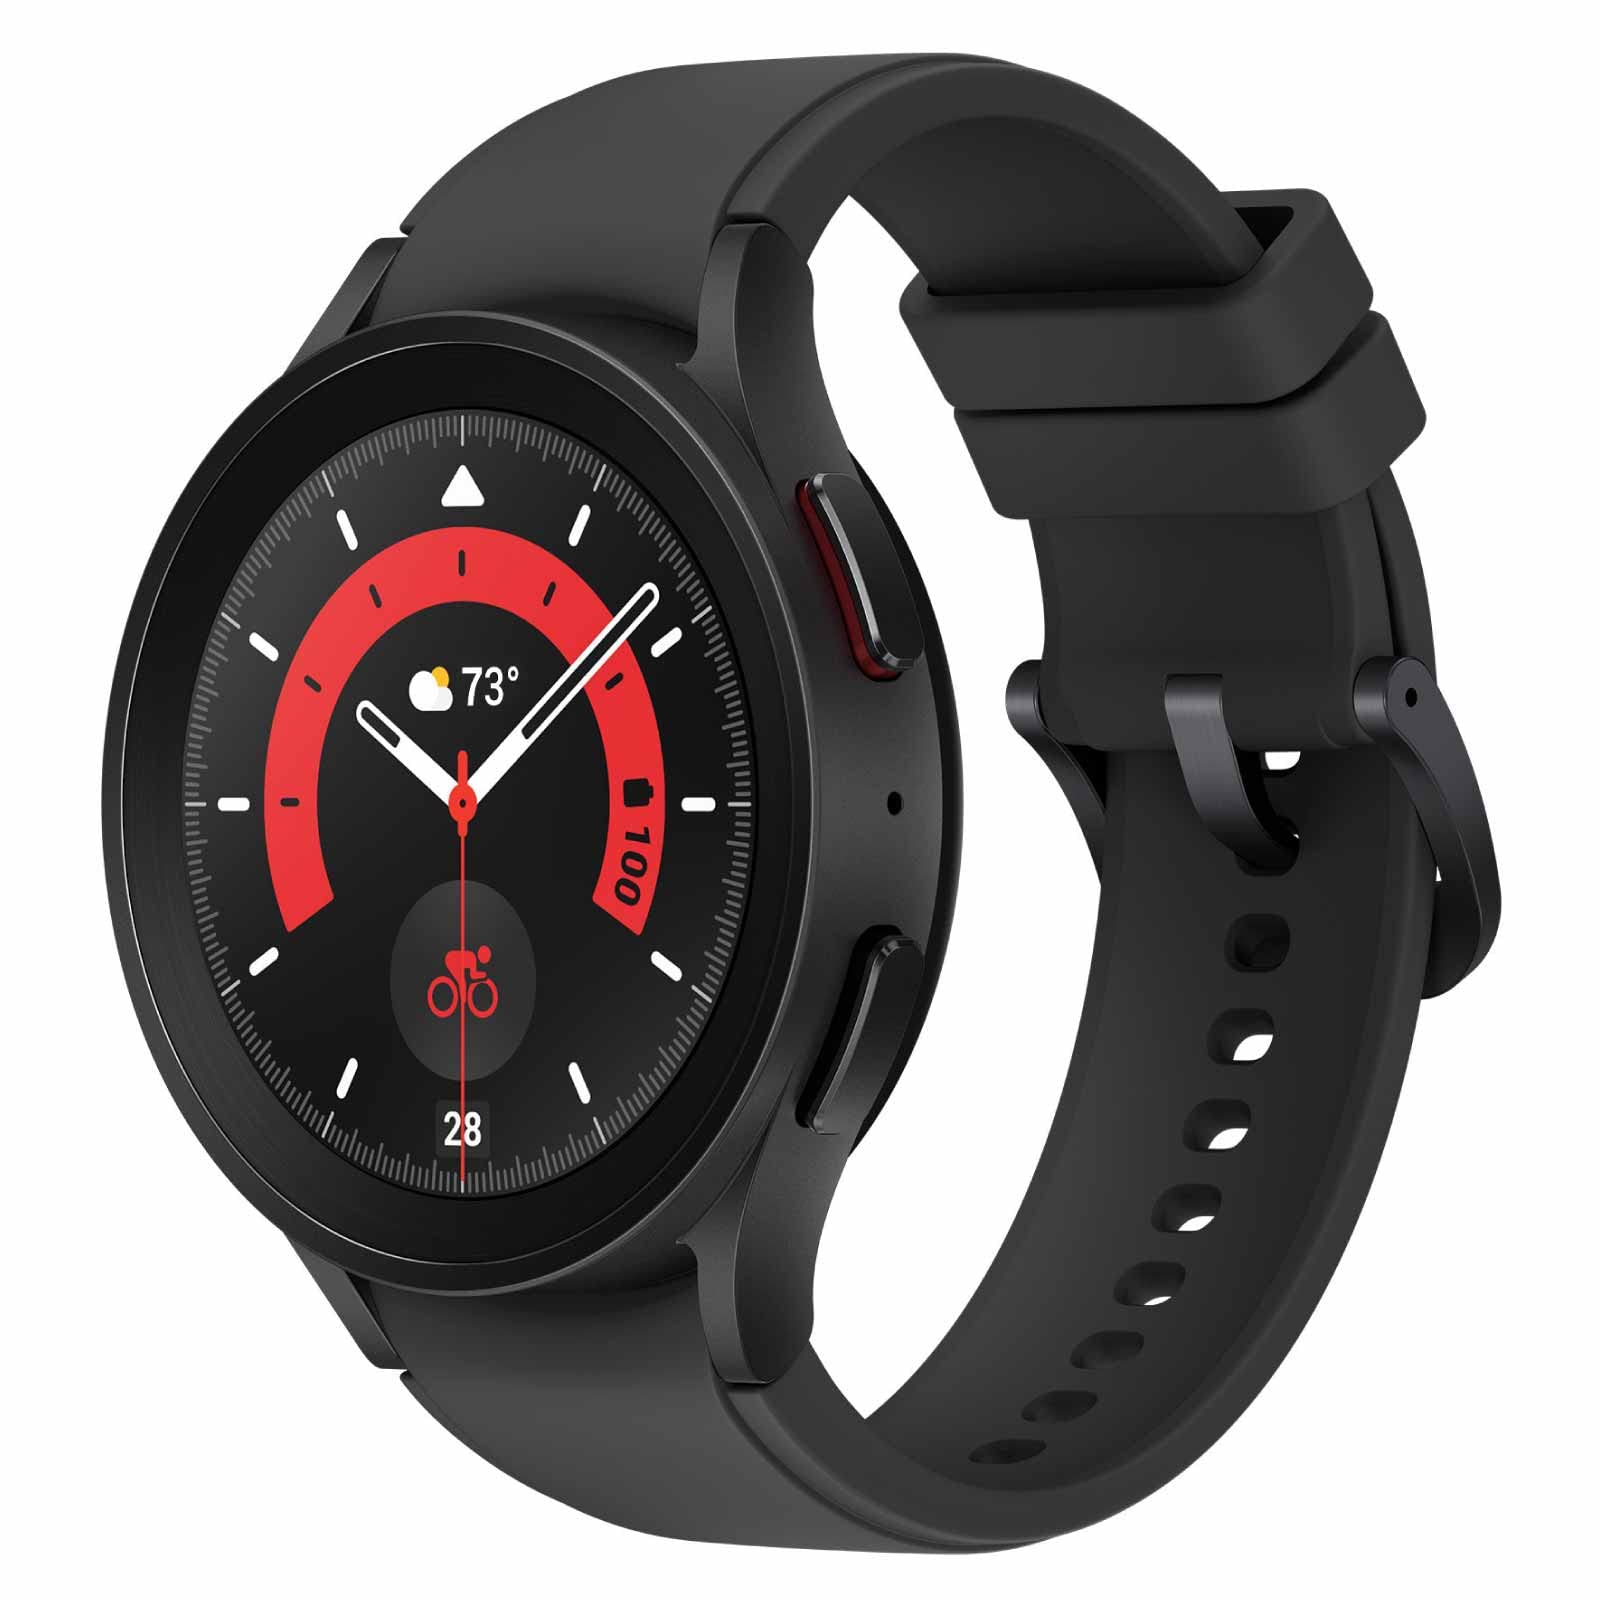 SAMSUNG Galaxy Watch5 Pro Bespoke Edition 45mm Bluetooth Smartwatch, Body, Health, Fitness, Sleep Tracker, Sapphire Crystal Glass, Titanium Frame, US Version, Black Ridge Sport Band, Black